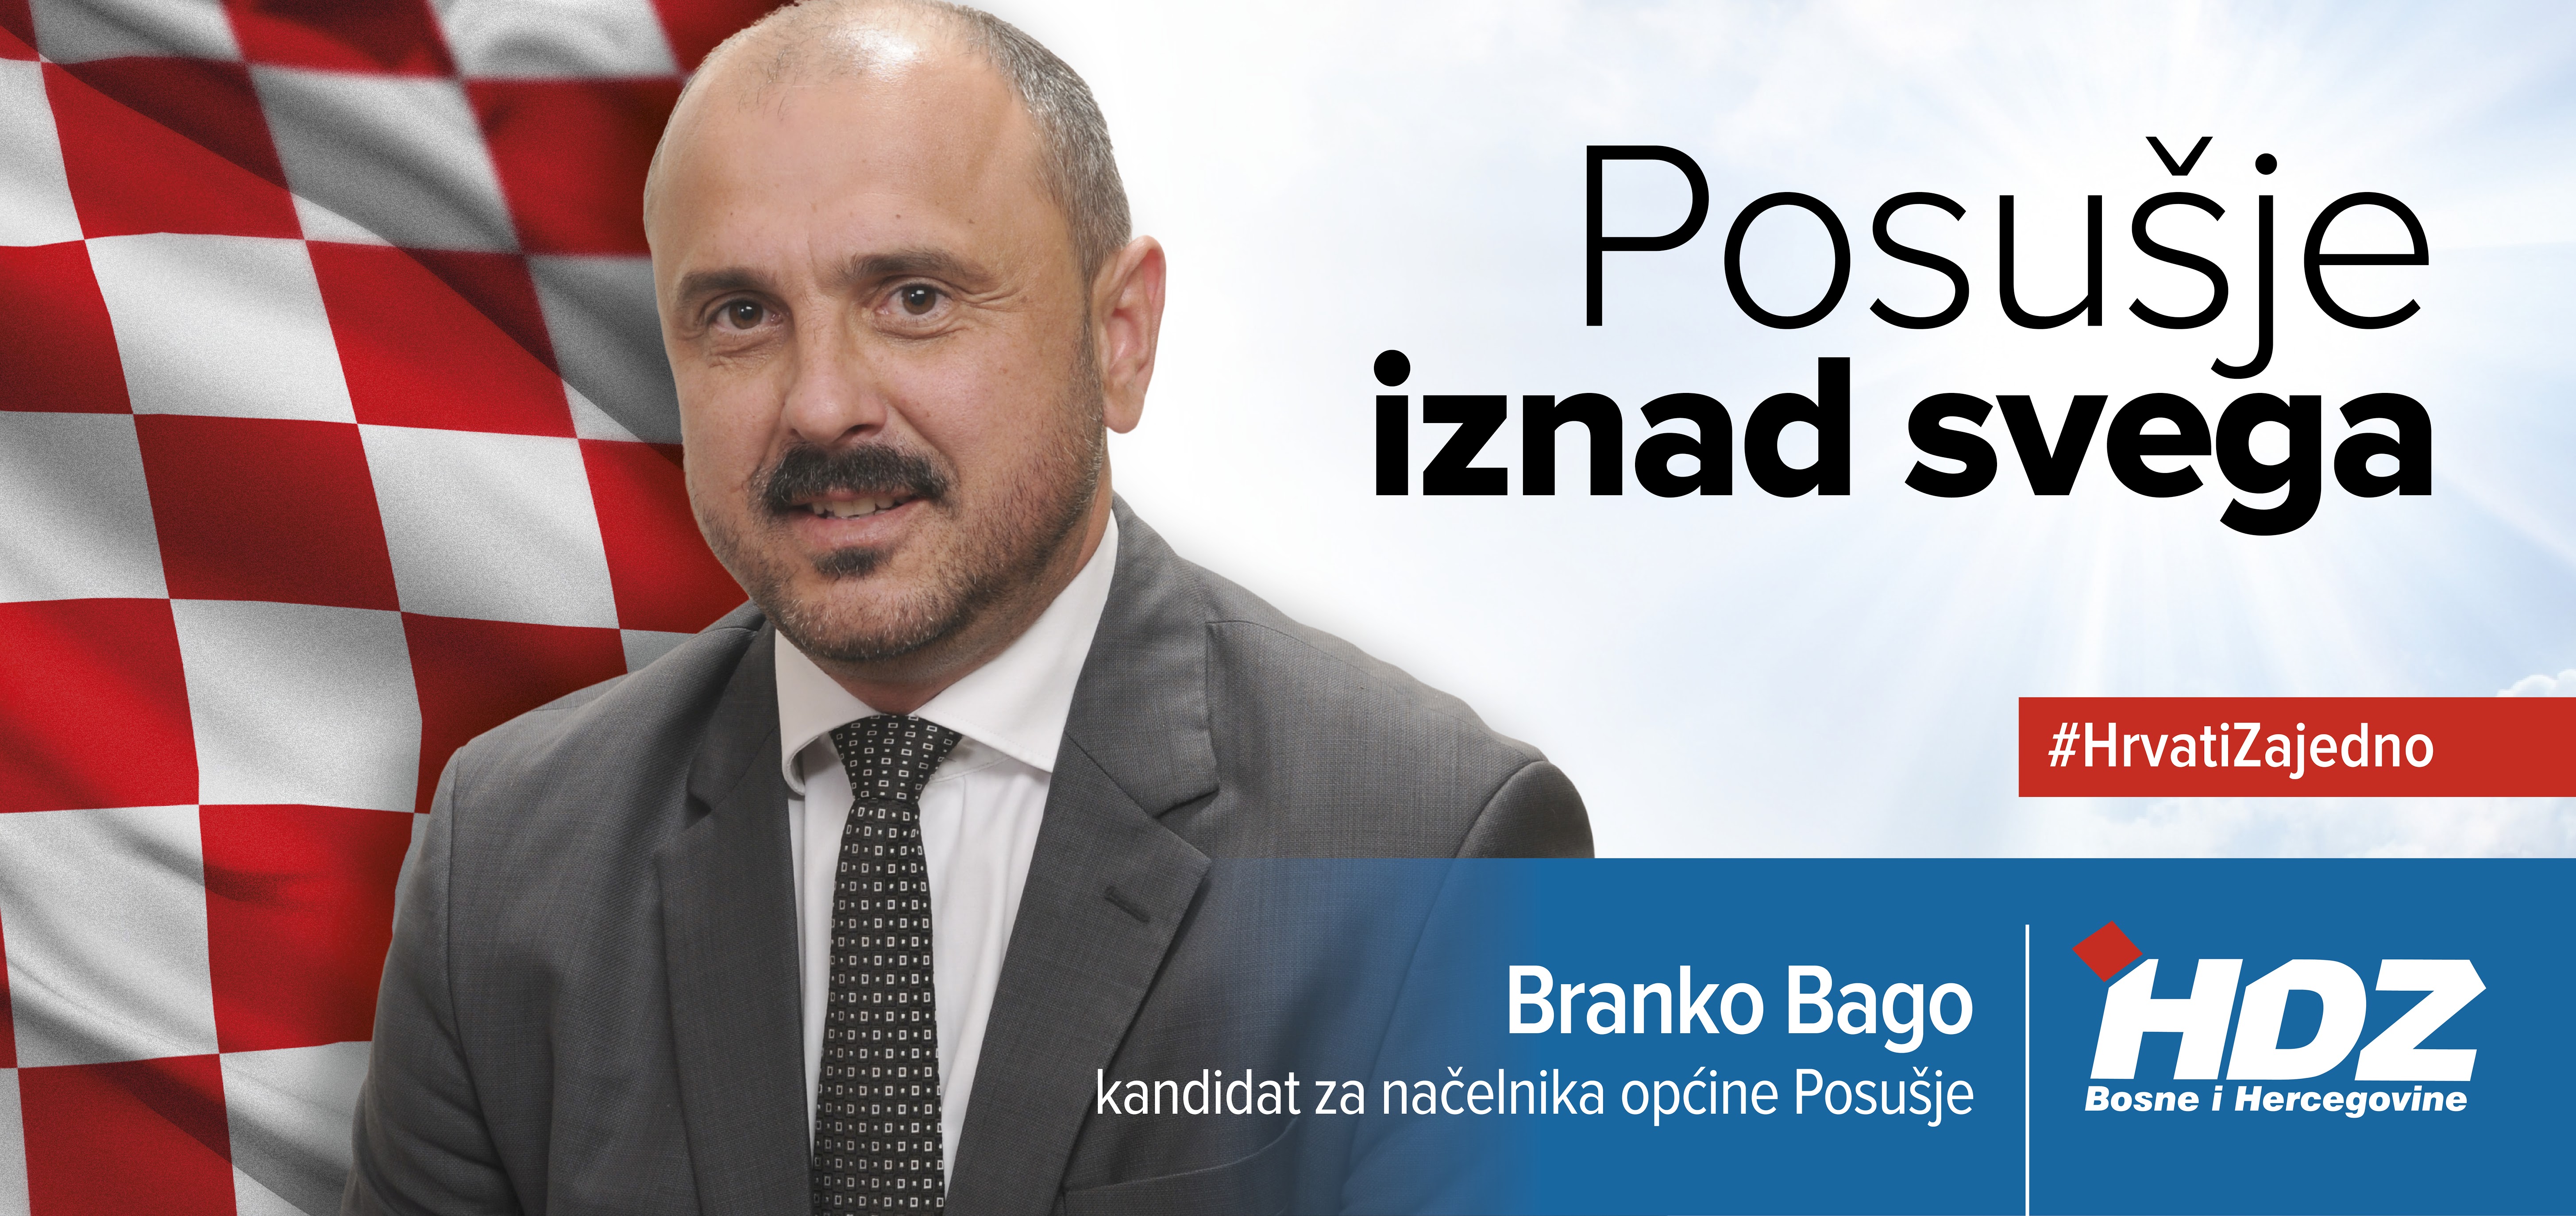 HDZ Branko Bago